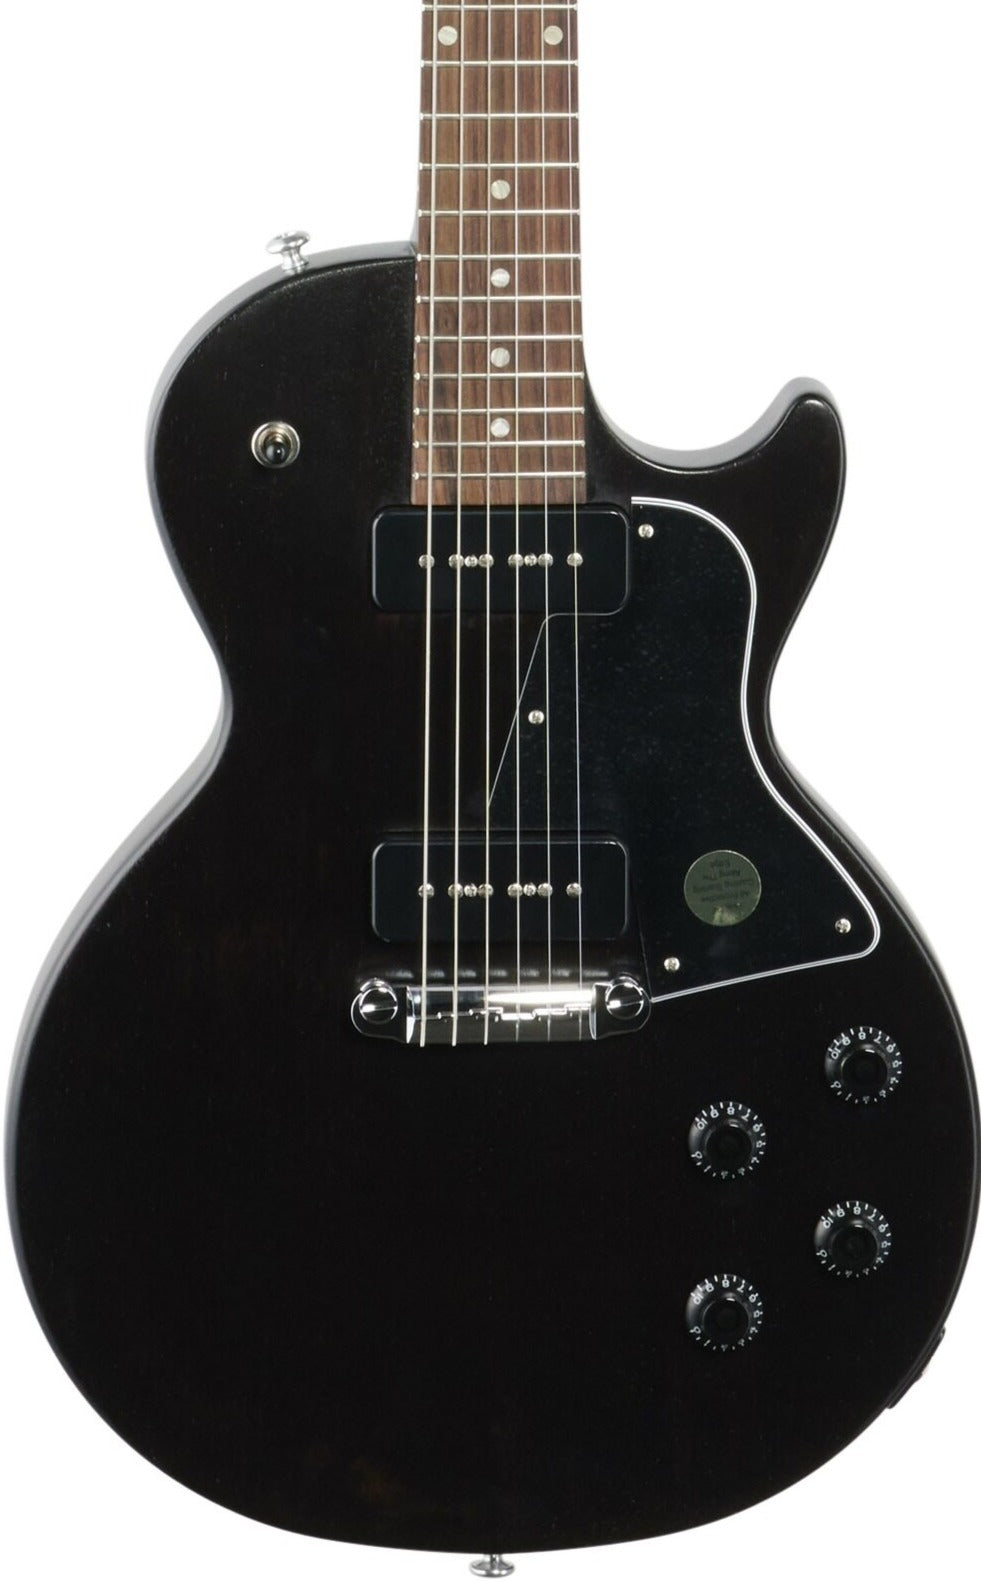 Gibson lespaul special P90 black - 通販 - gofukuyasan.com